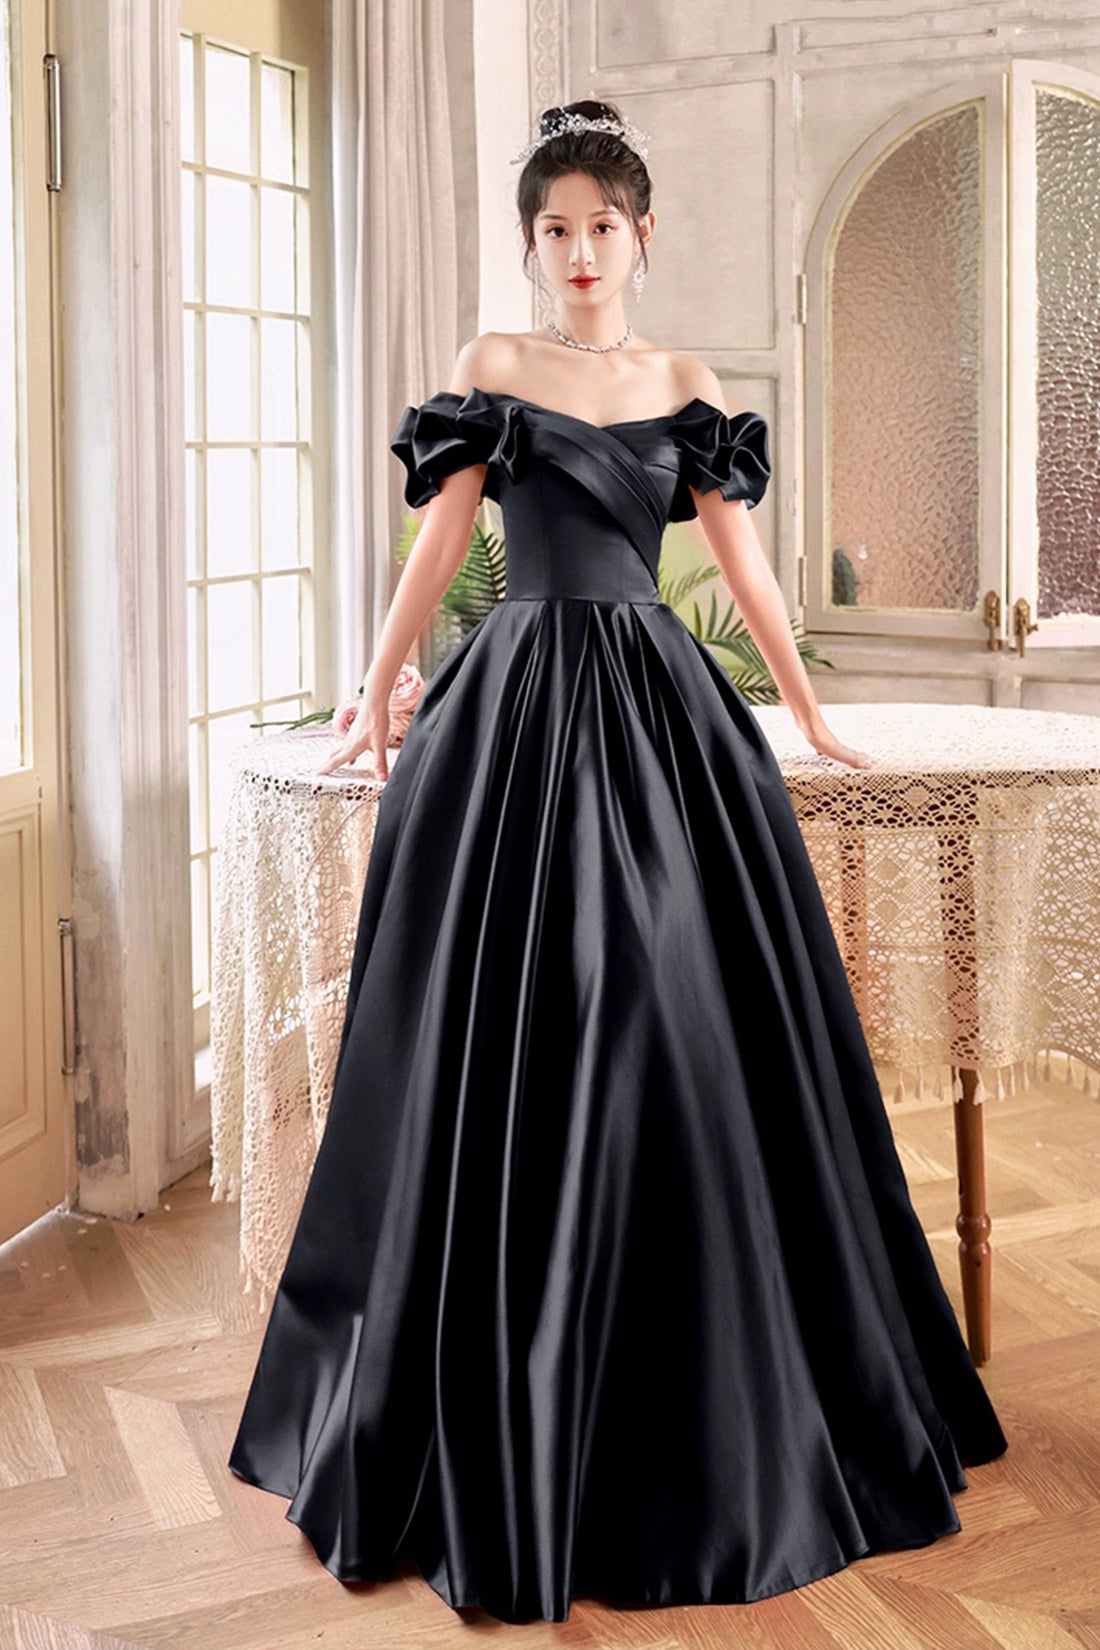 Black dress 🖤 | Princess ball gowns, Bridal dresses, Gowns